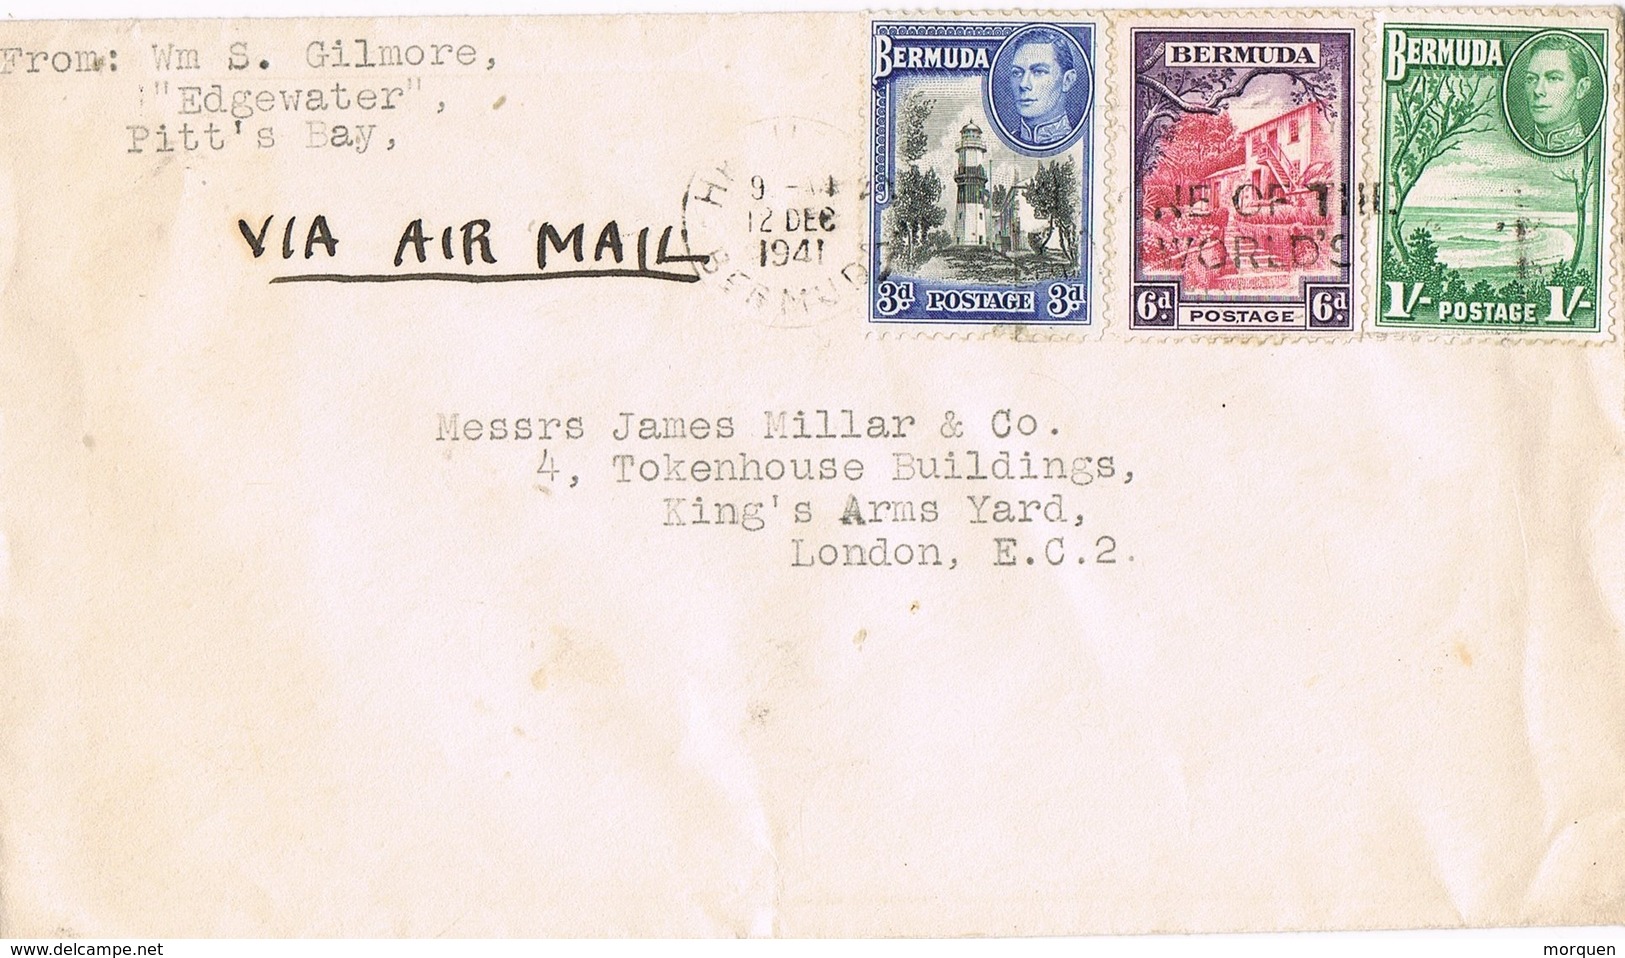 29943. Carta Aerea PITT'S BAY (bermuda) 1941. Fechador HAMILTON - Bermudas